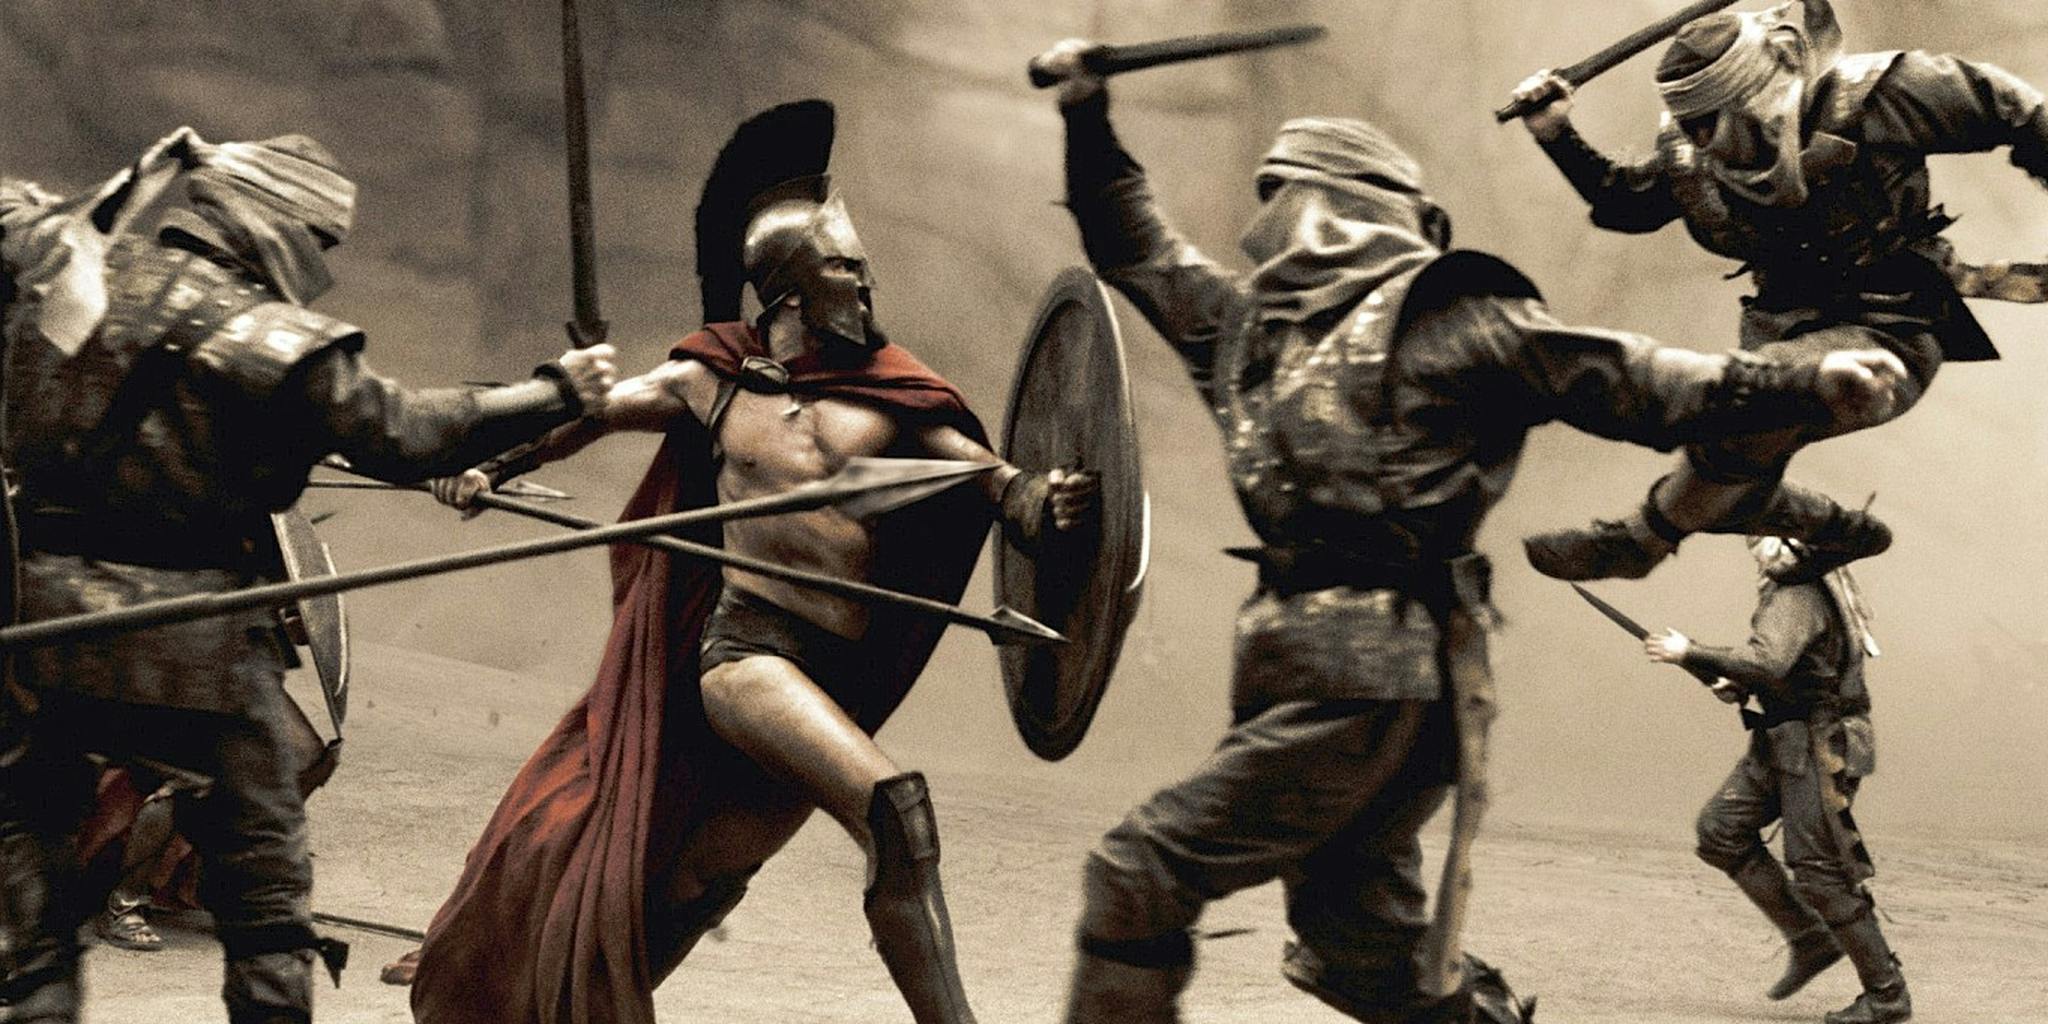 Guy recreates famous 300 battle scene in gym – SPARTA